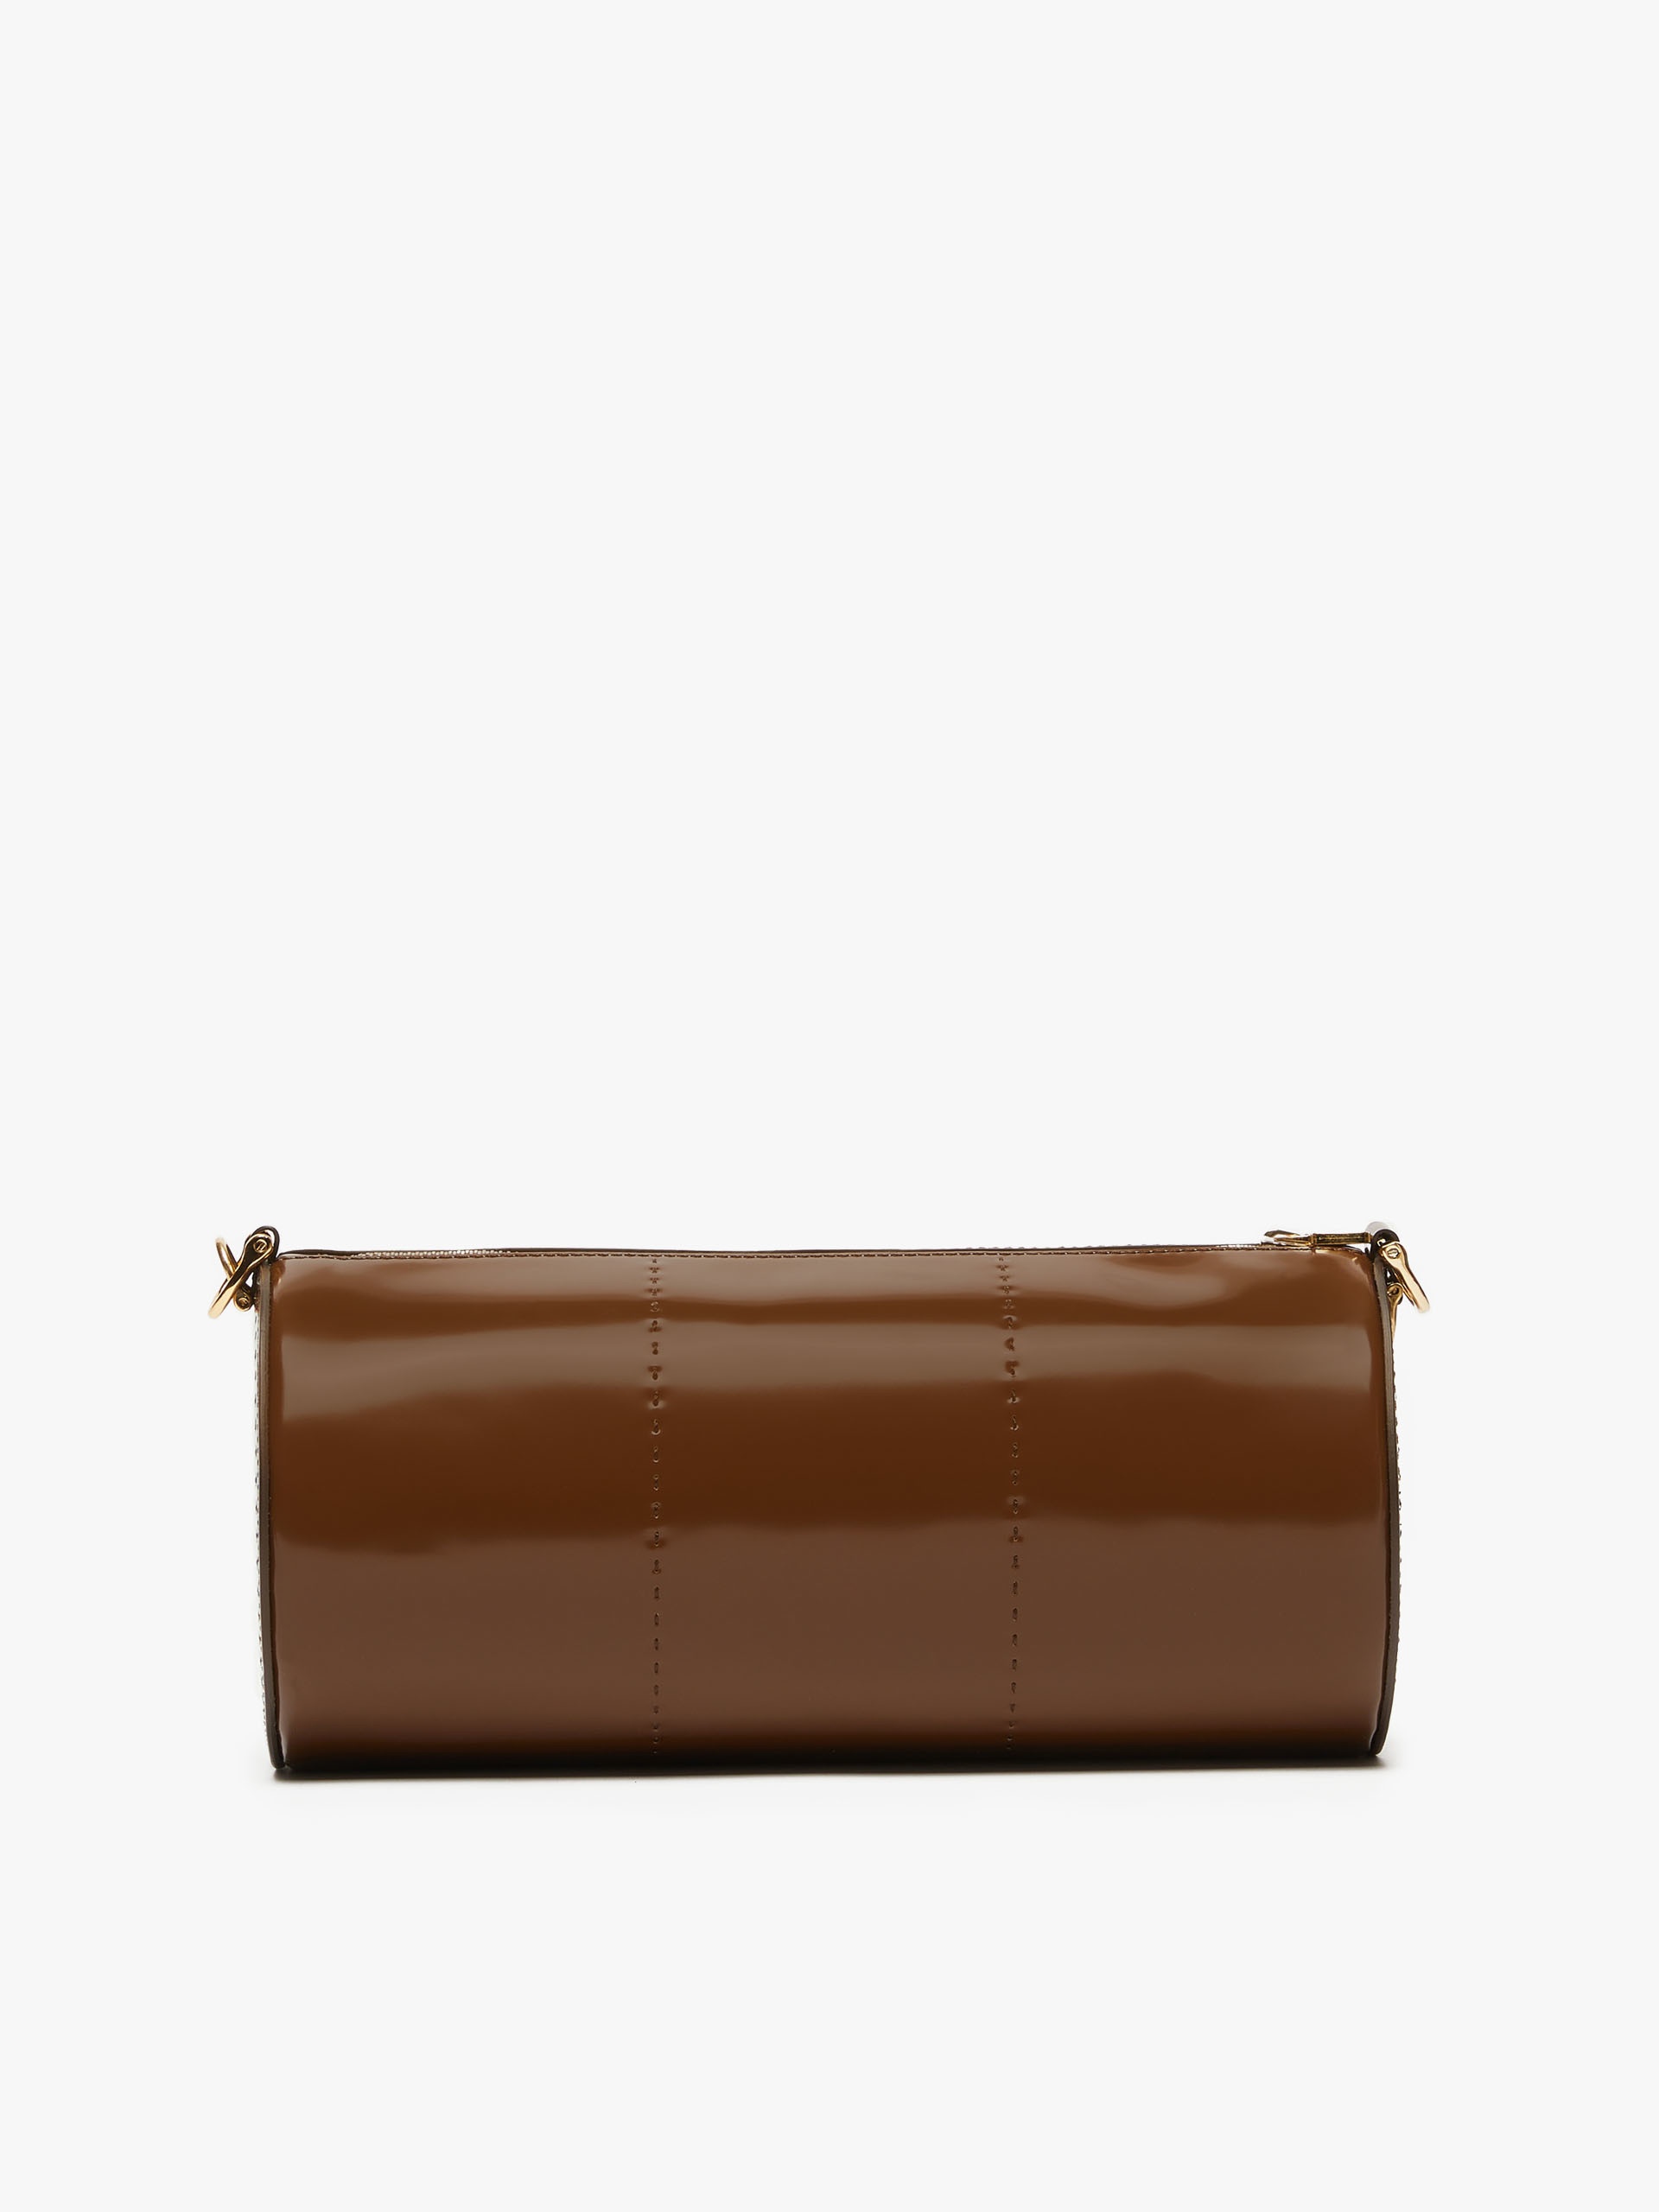 Medium leather bag - 3